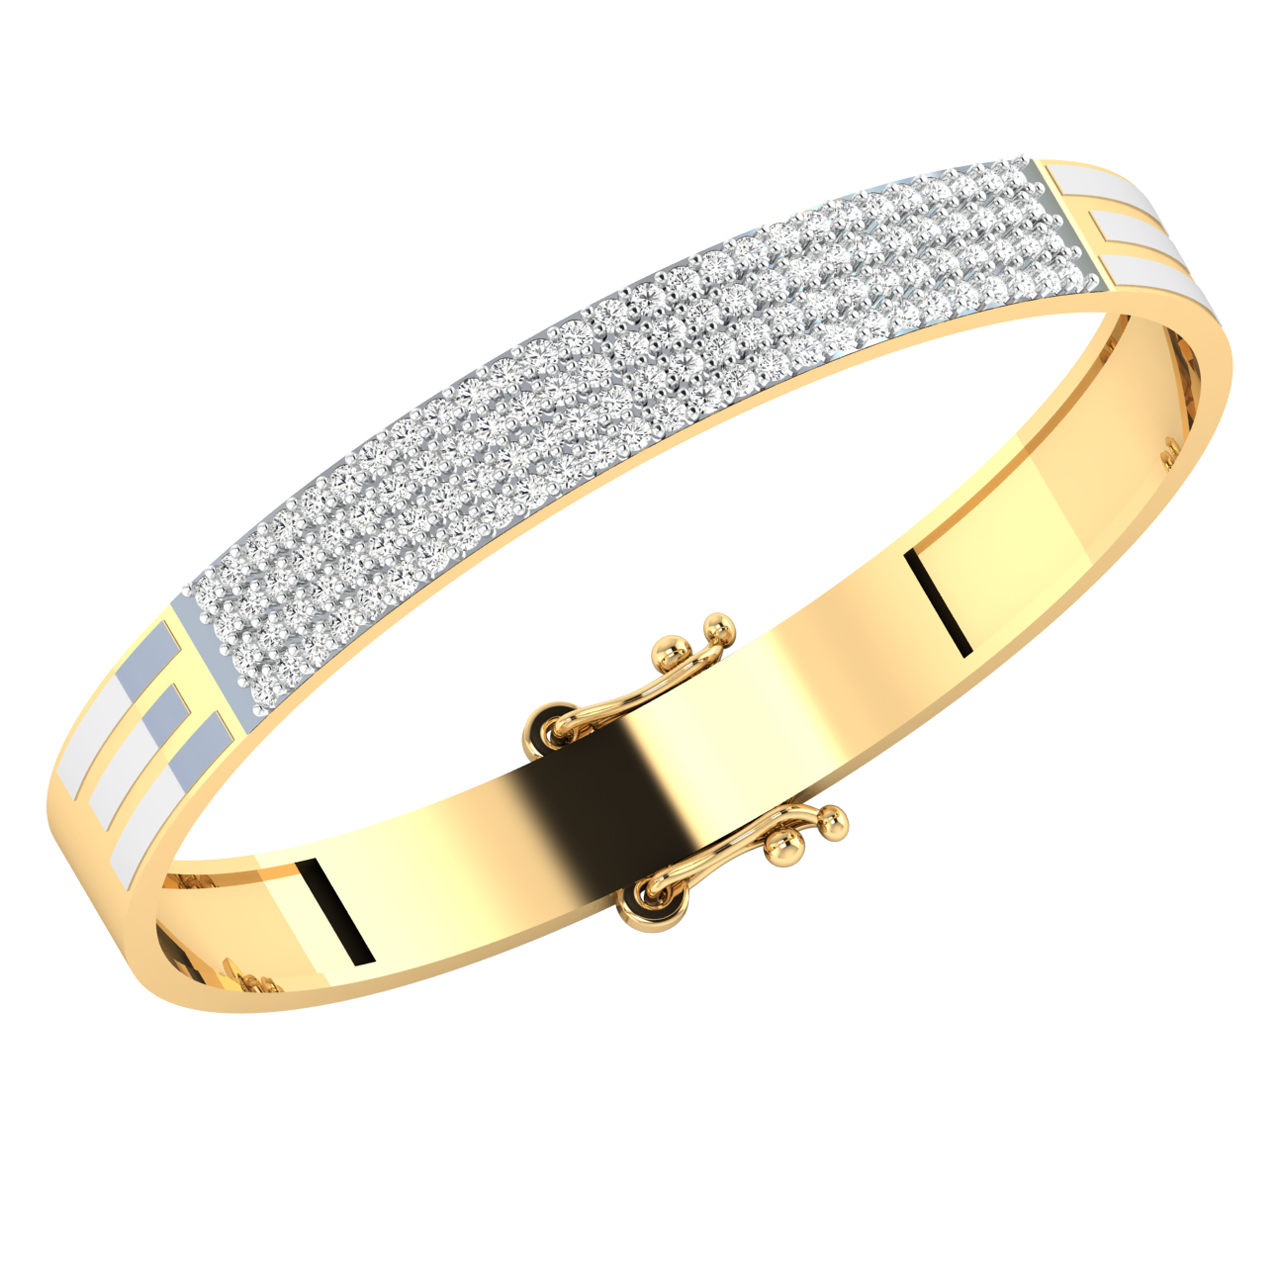 Diamond Bracelets - Gold and Diamond Jewelry | Joseph's Jewelry